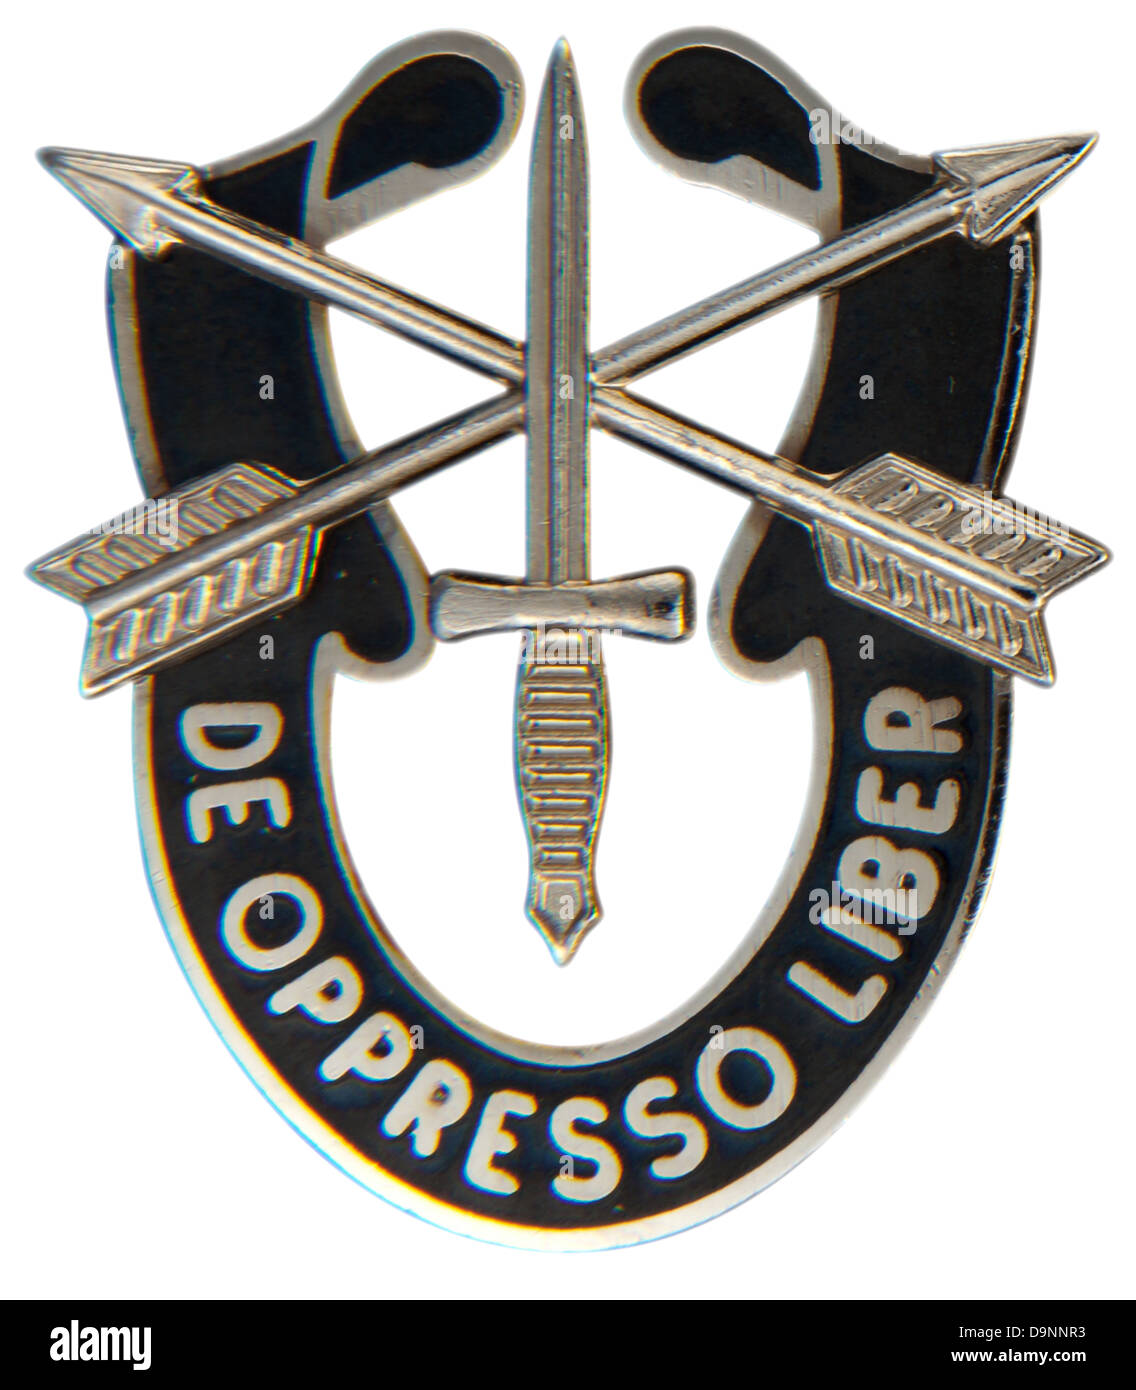 Philippines Navy Special Operations SEAL Badge & Marines Tab Vietnam era